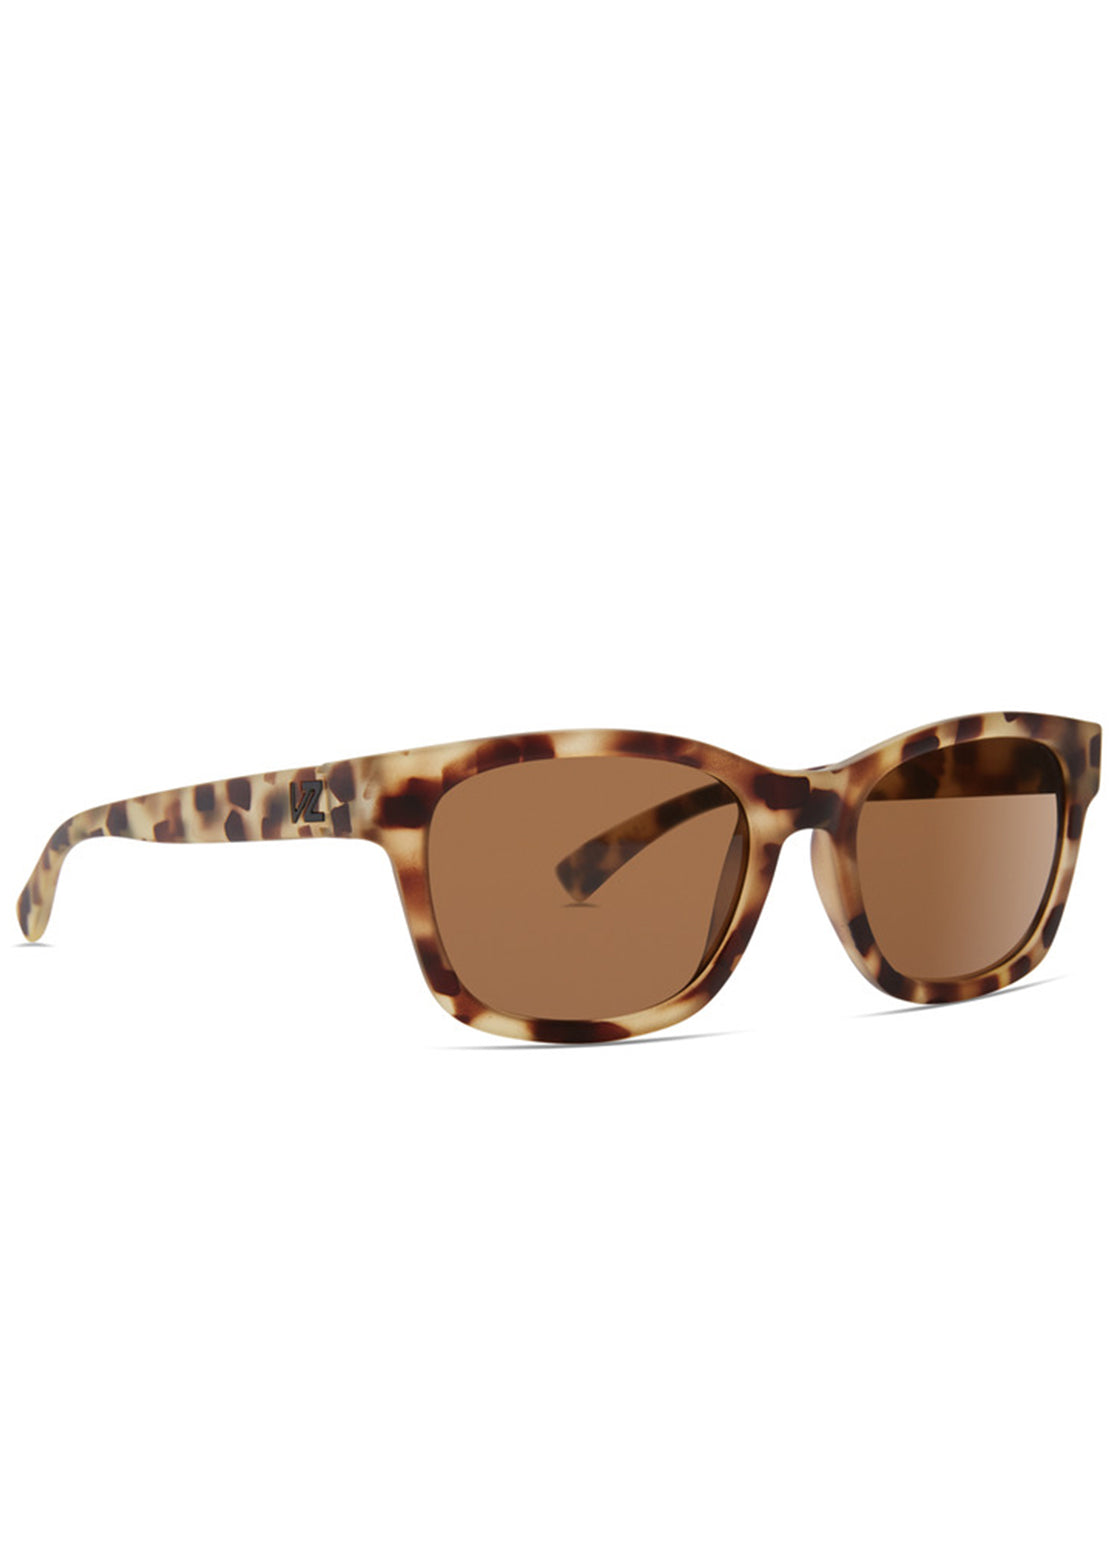 Von Zipper Approach Sunglasses Dusty Tortoise Satin/Bronze